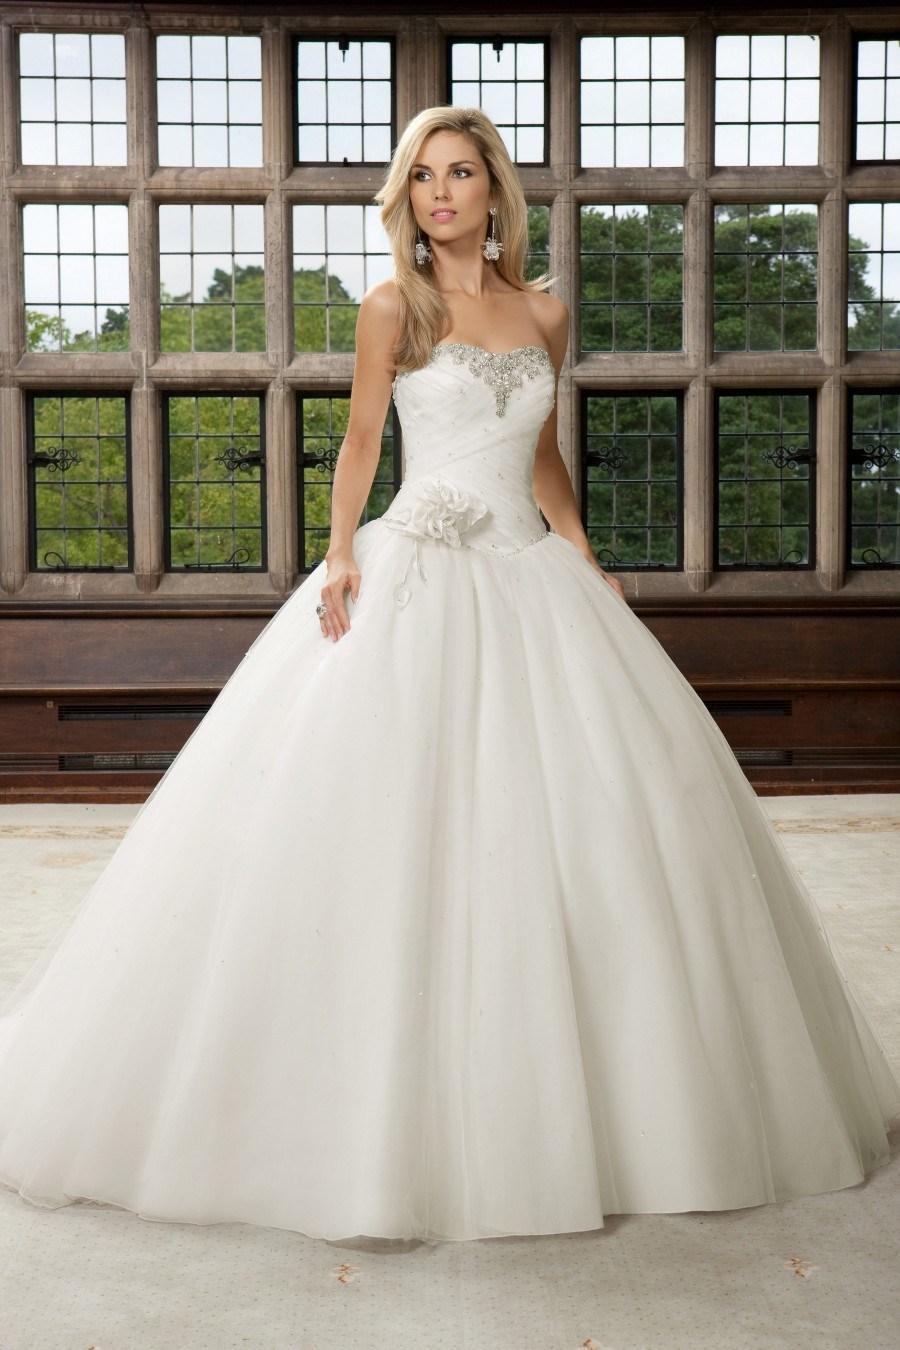 Cinderella Wedding Gown
 Cinderella Ball Gown Wedding Dress Wedding and Bridal